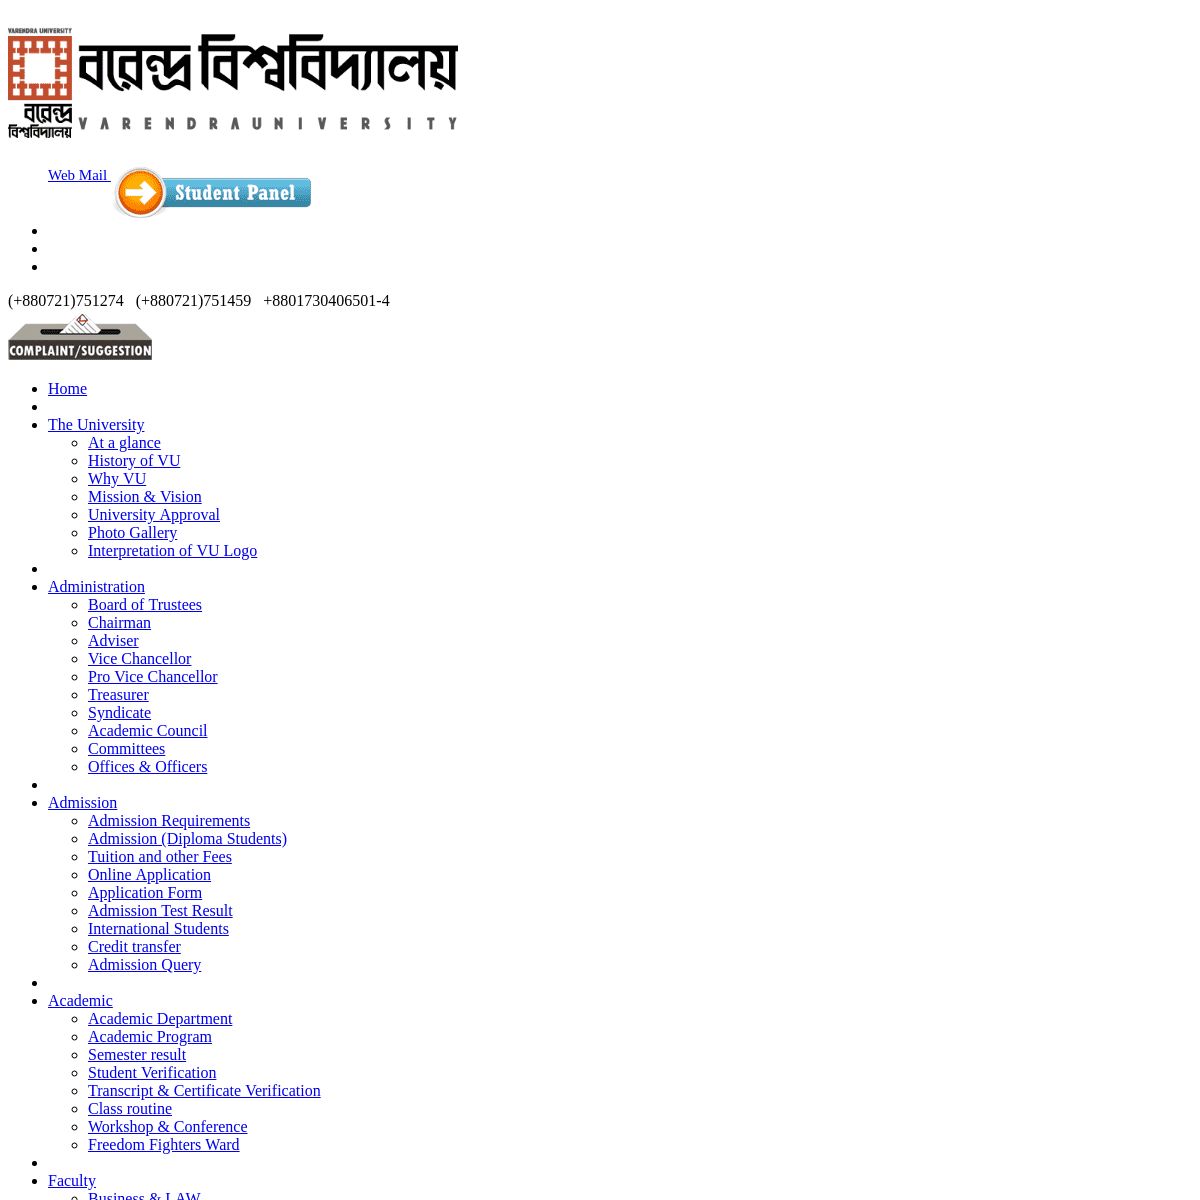 A complete backup of vu.edu.bd